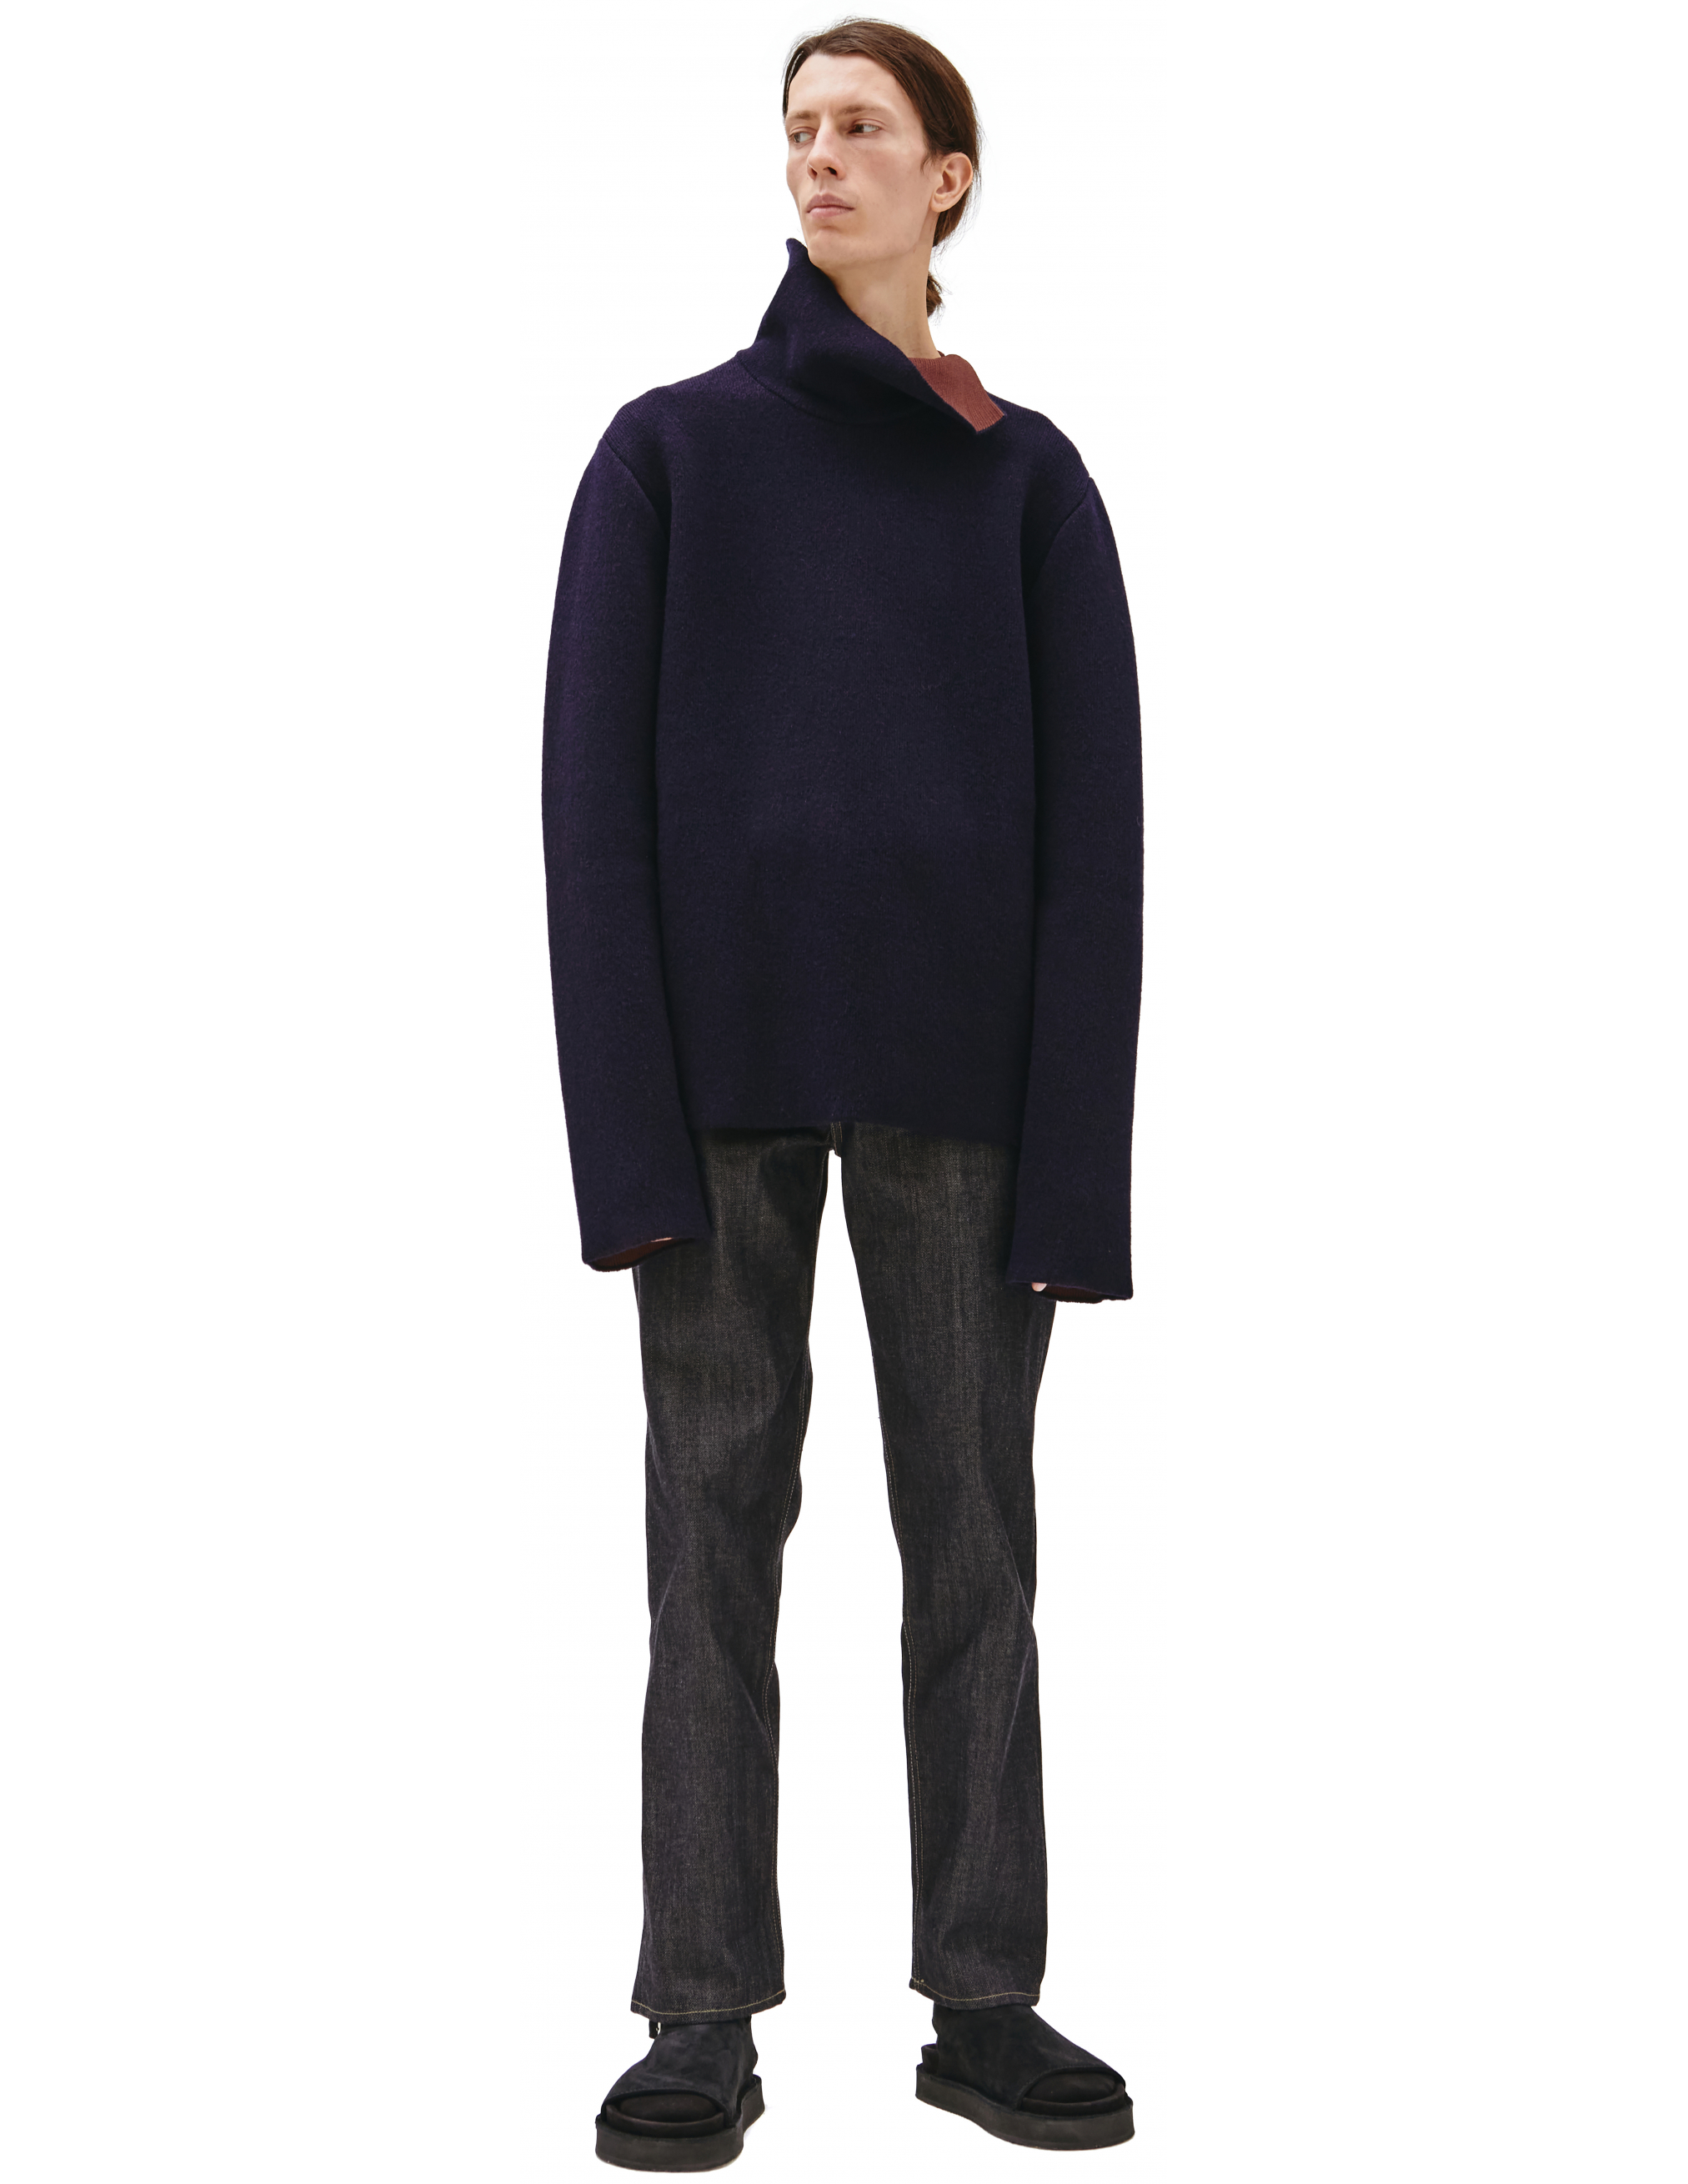 Темно-синий свитер с контрастным воротником OAMC OAMT751167/OTY20002A/401, размер XXL;XL;L